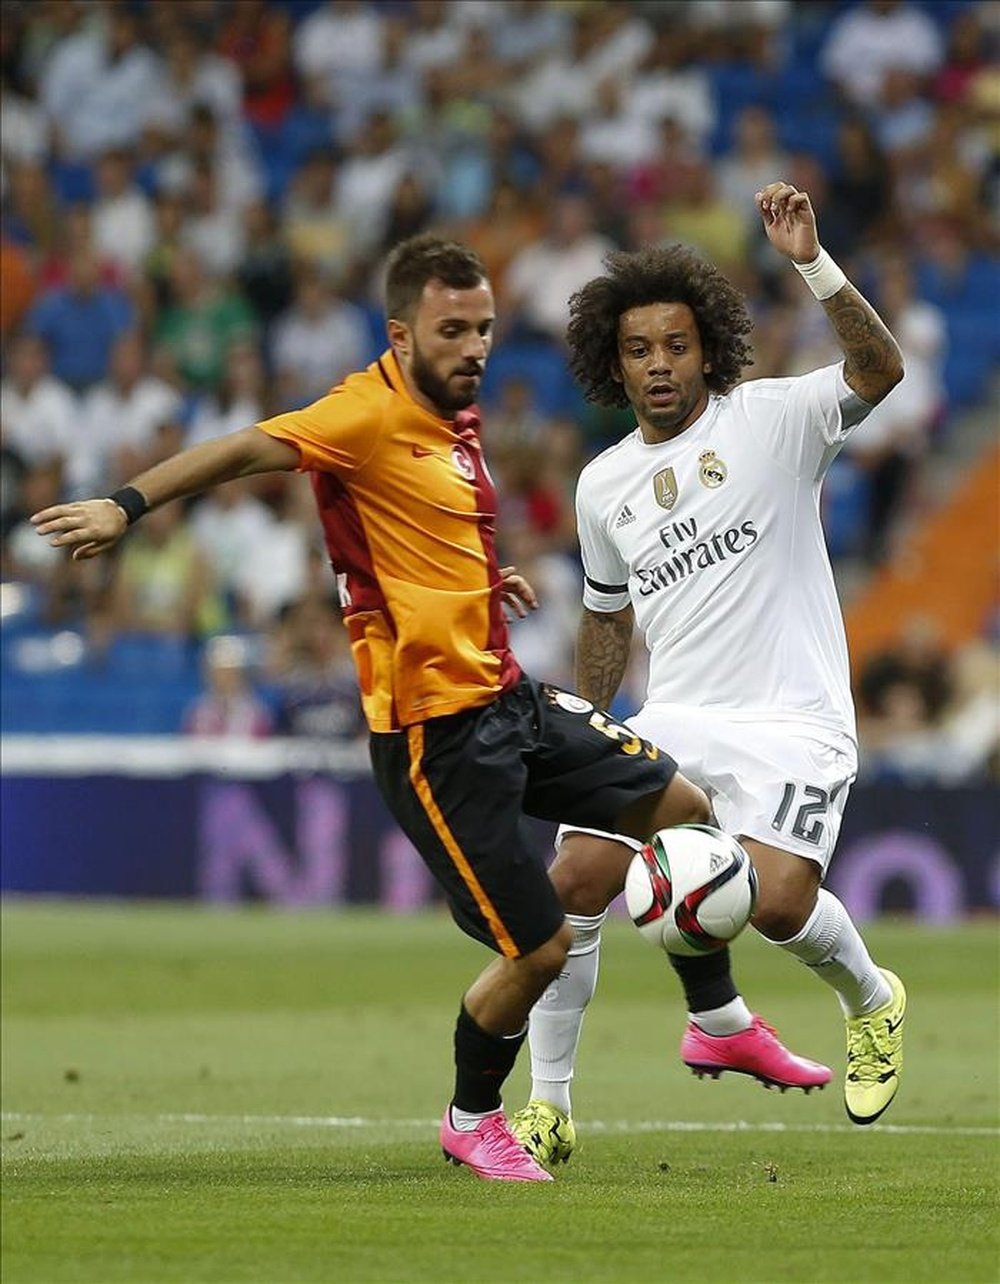 Galatasaray - Real Madrid: onzes iniciais confirmados. EFE